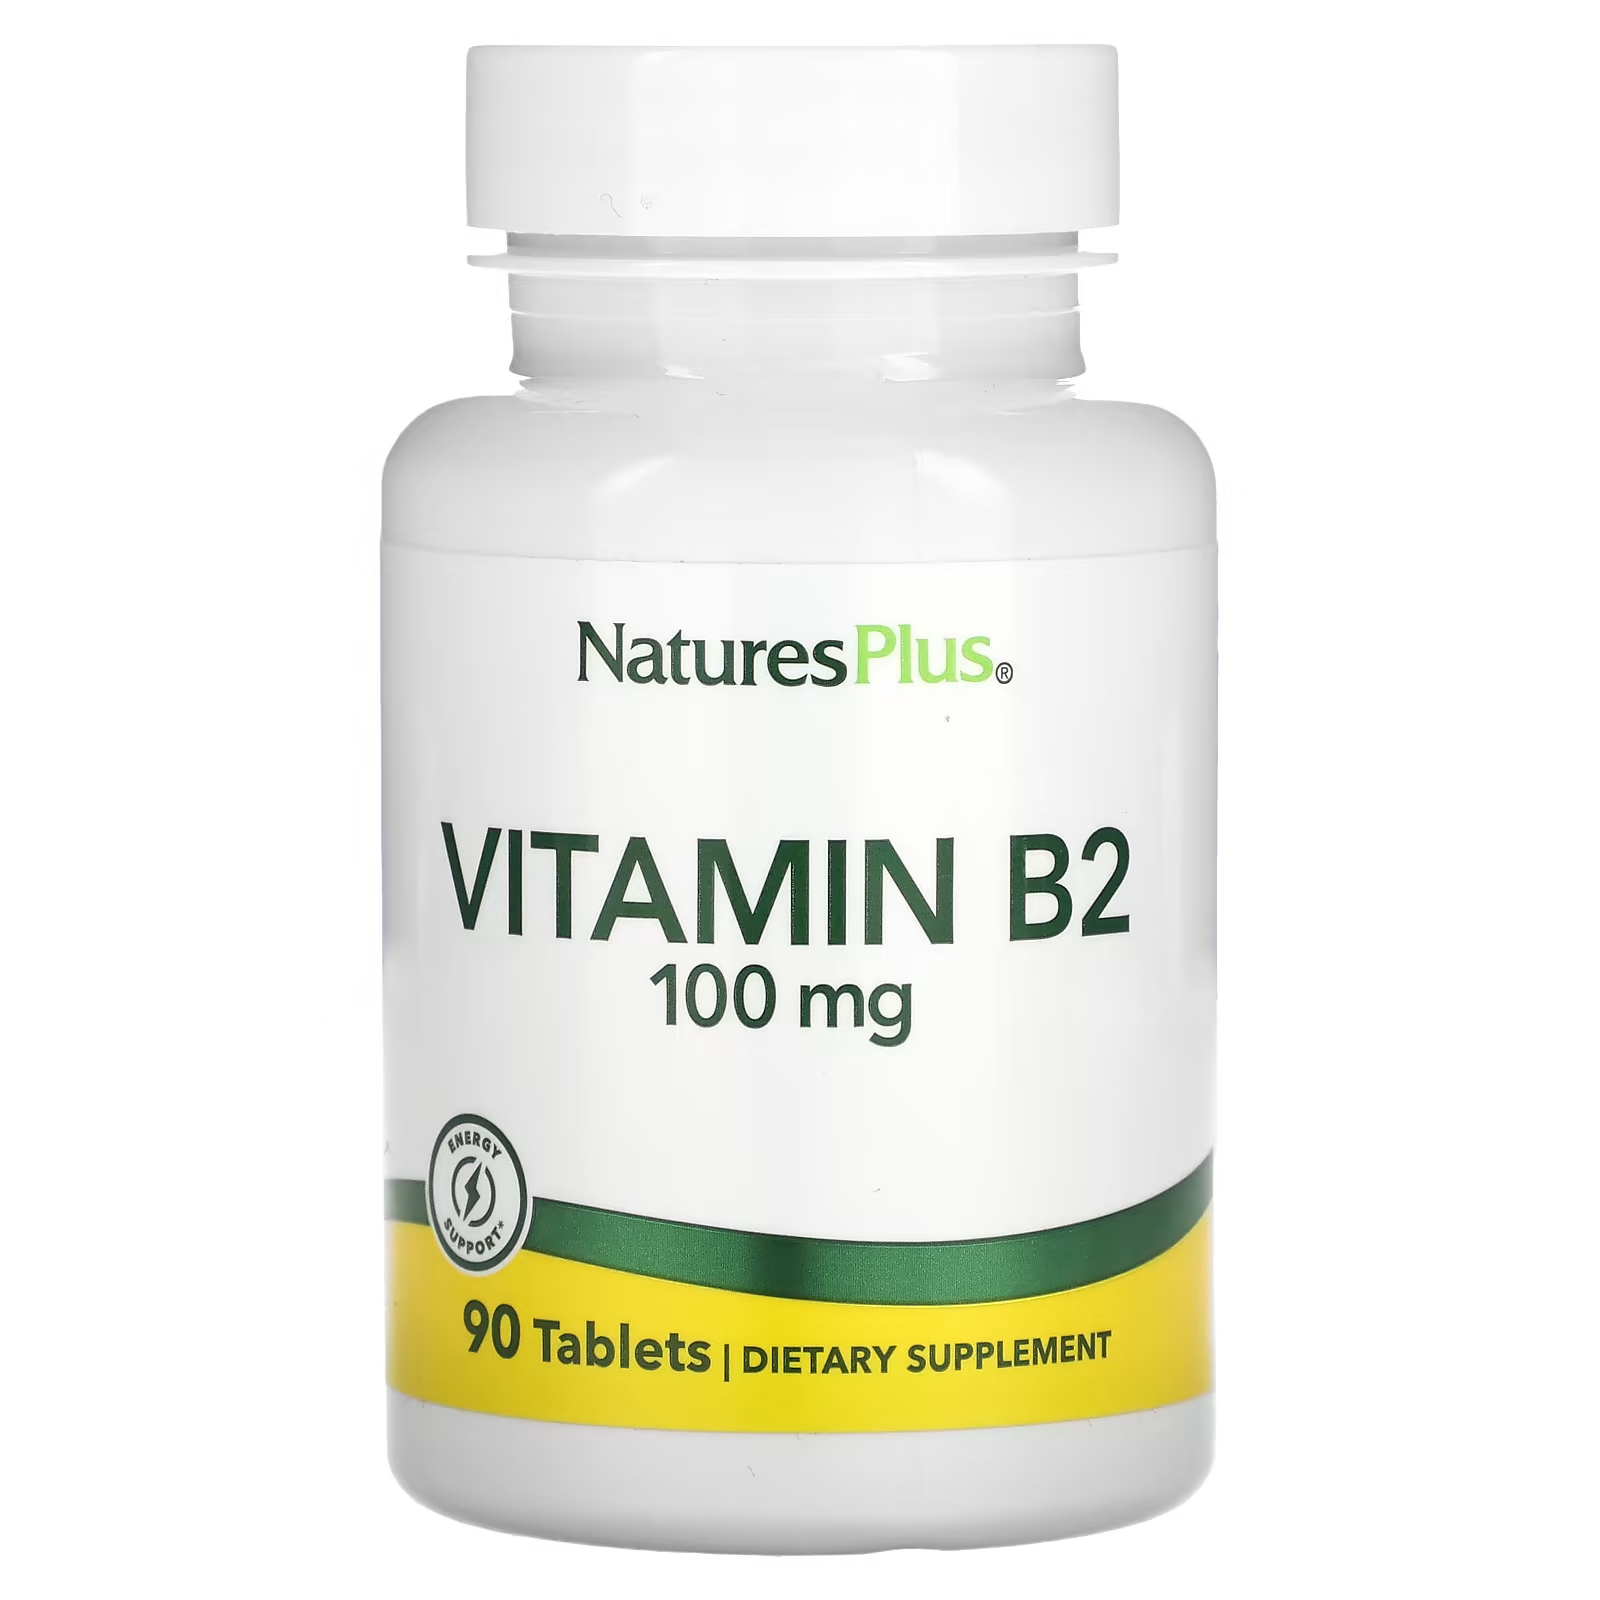 Биологически активная добавка NaturesPlus витамин B-2, 100 мг., 90 таблеток биологически активная добавка swanson ниацин пролонгированное высвобождение 500 мг 90 таблеток